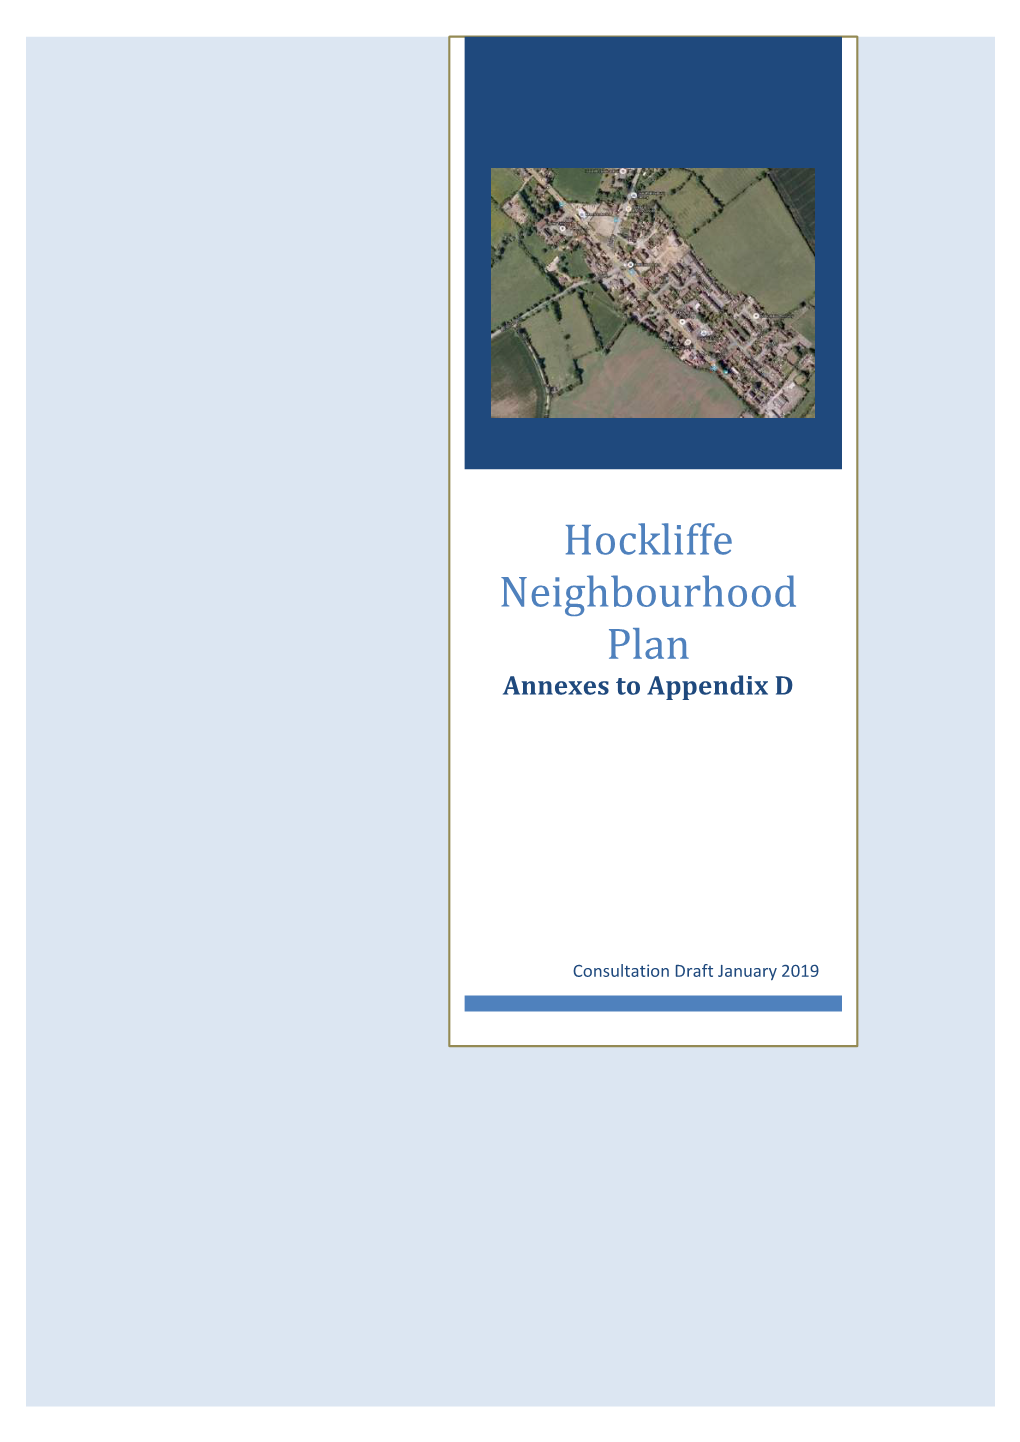 Hockliffe Neighbourhood Plan Annexes to Appendix D